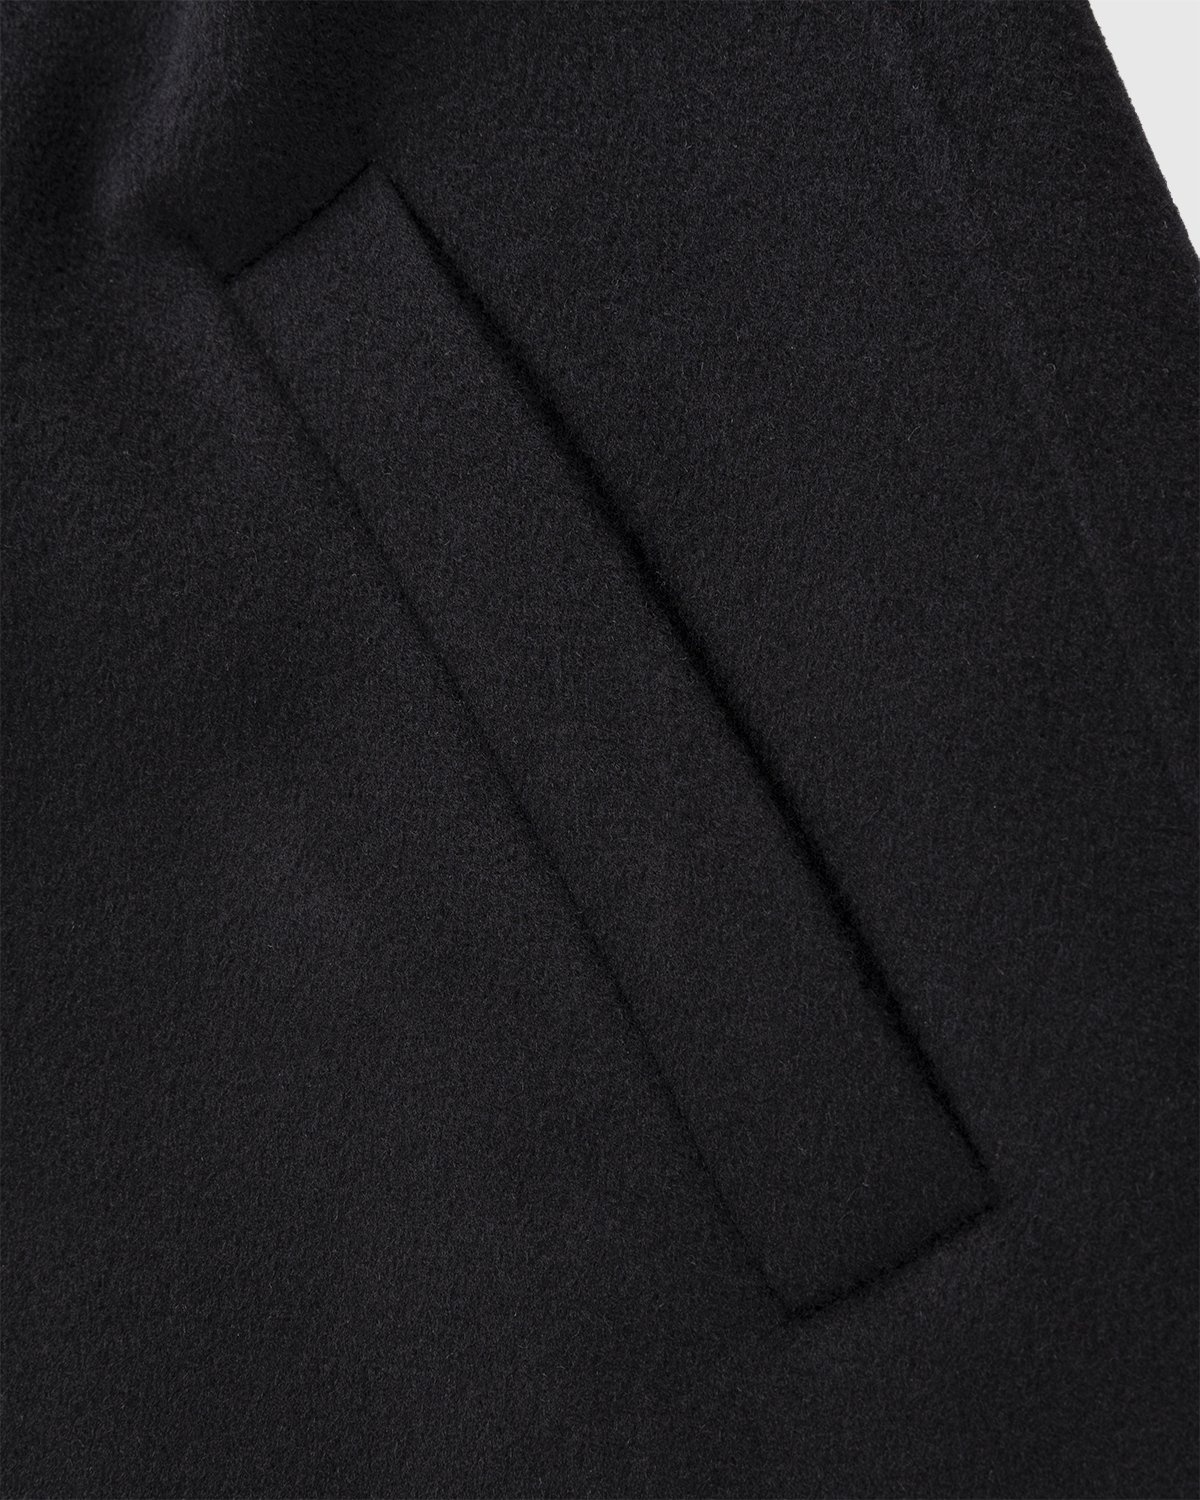 Acne Studios – Doubleface Coat Black - Trench Coats - Black - Image 5